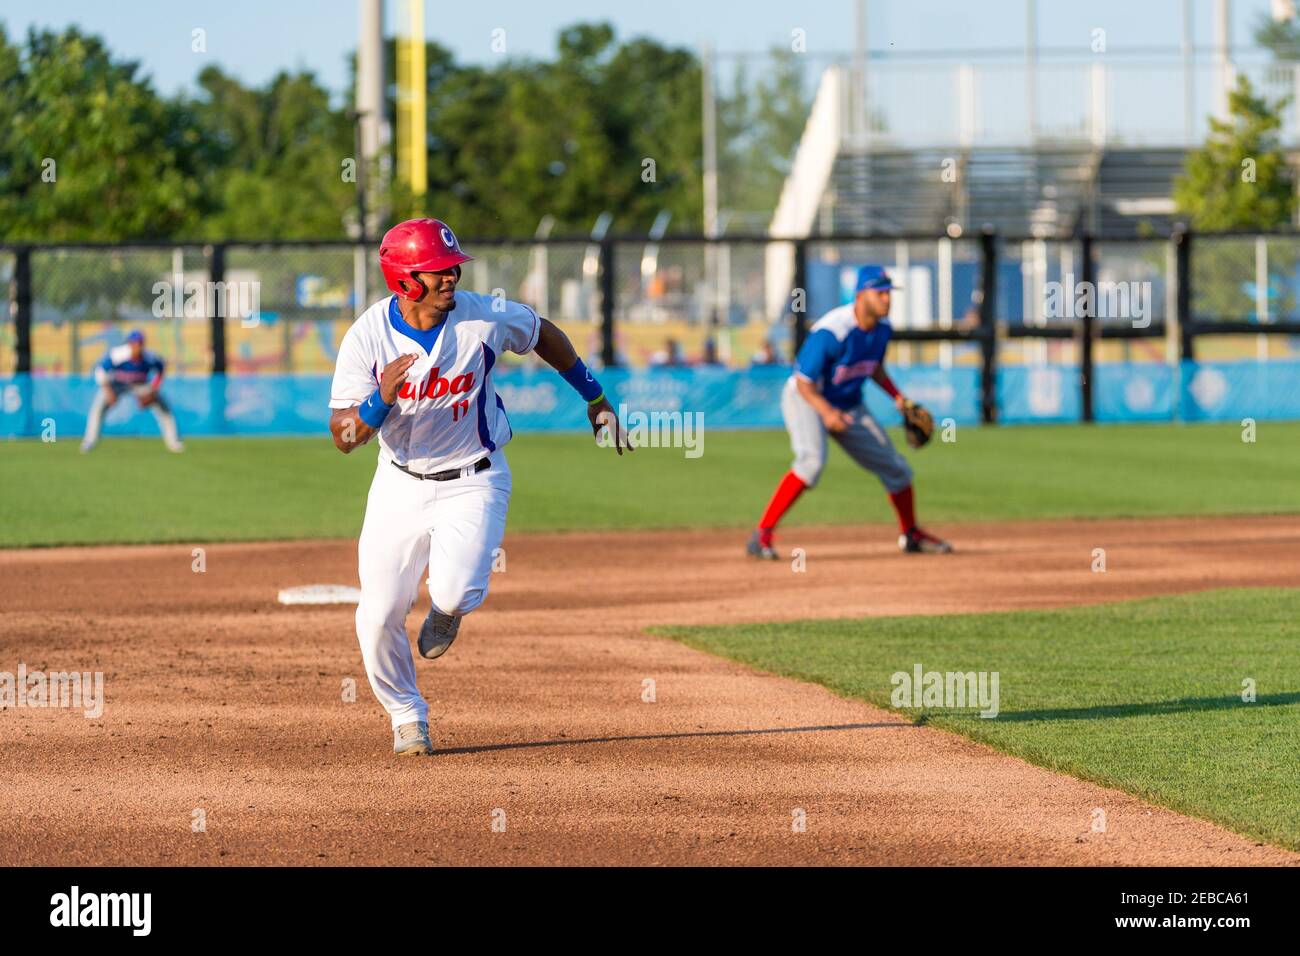 Toronto Panam Baseball 2015-Cuba vs the Dominican Republic: Yosvany Alarcon steals third base in front of pitcher Adalberto Mendez. He will later score put Stock Photo